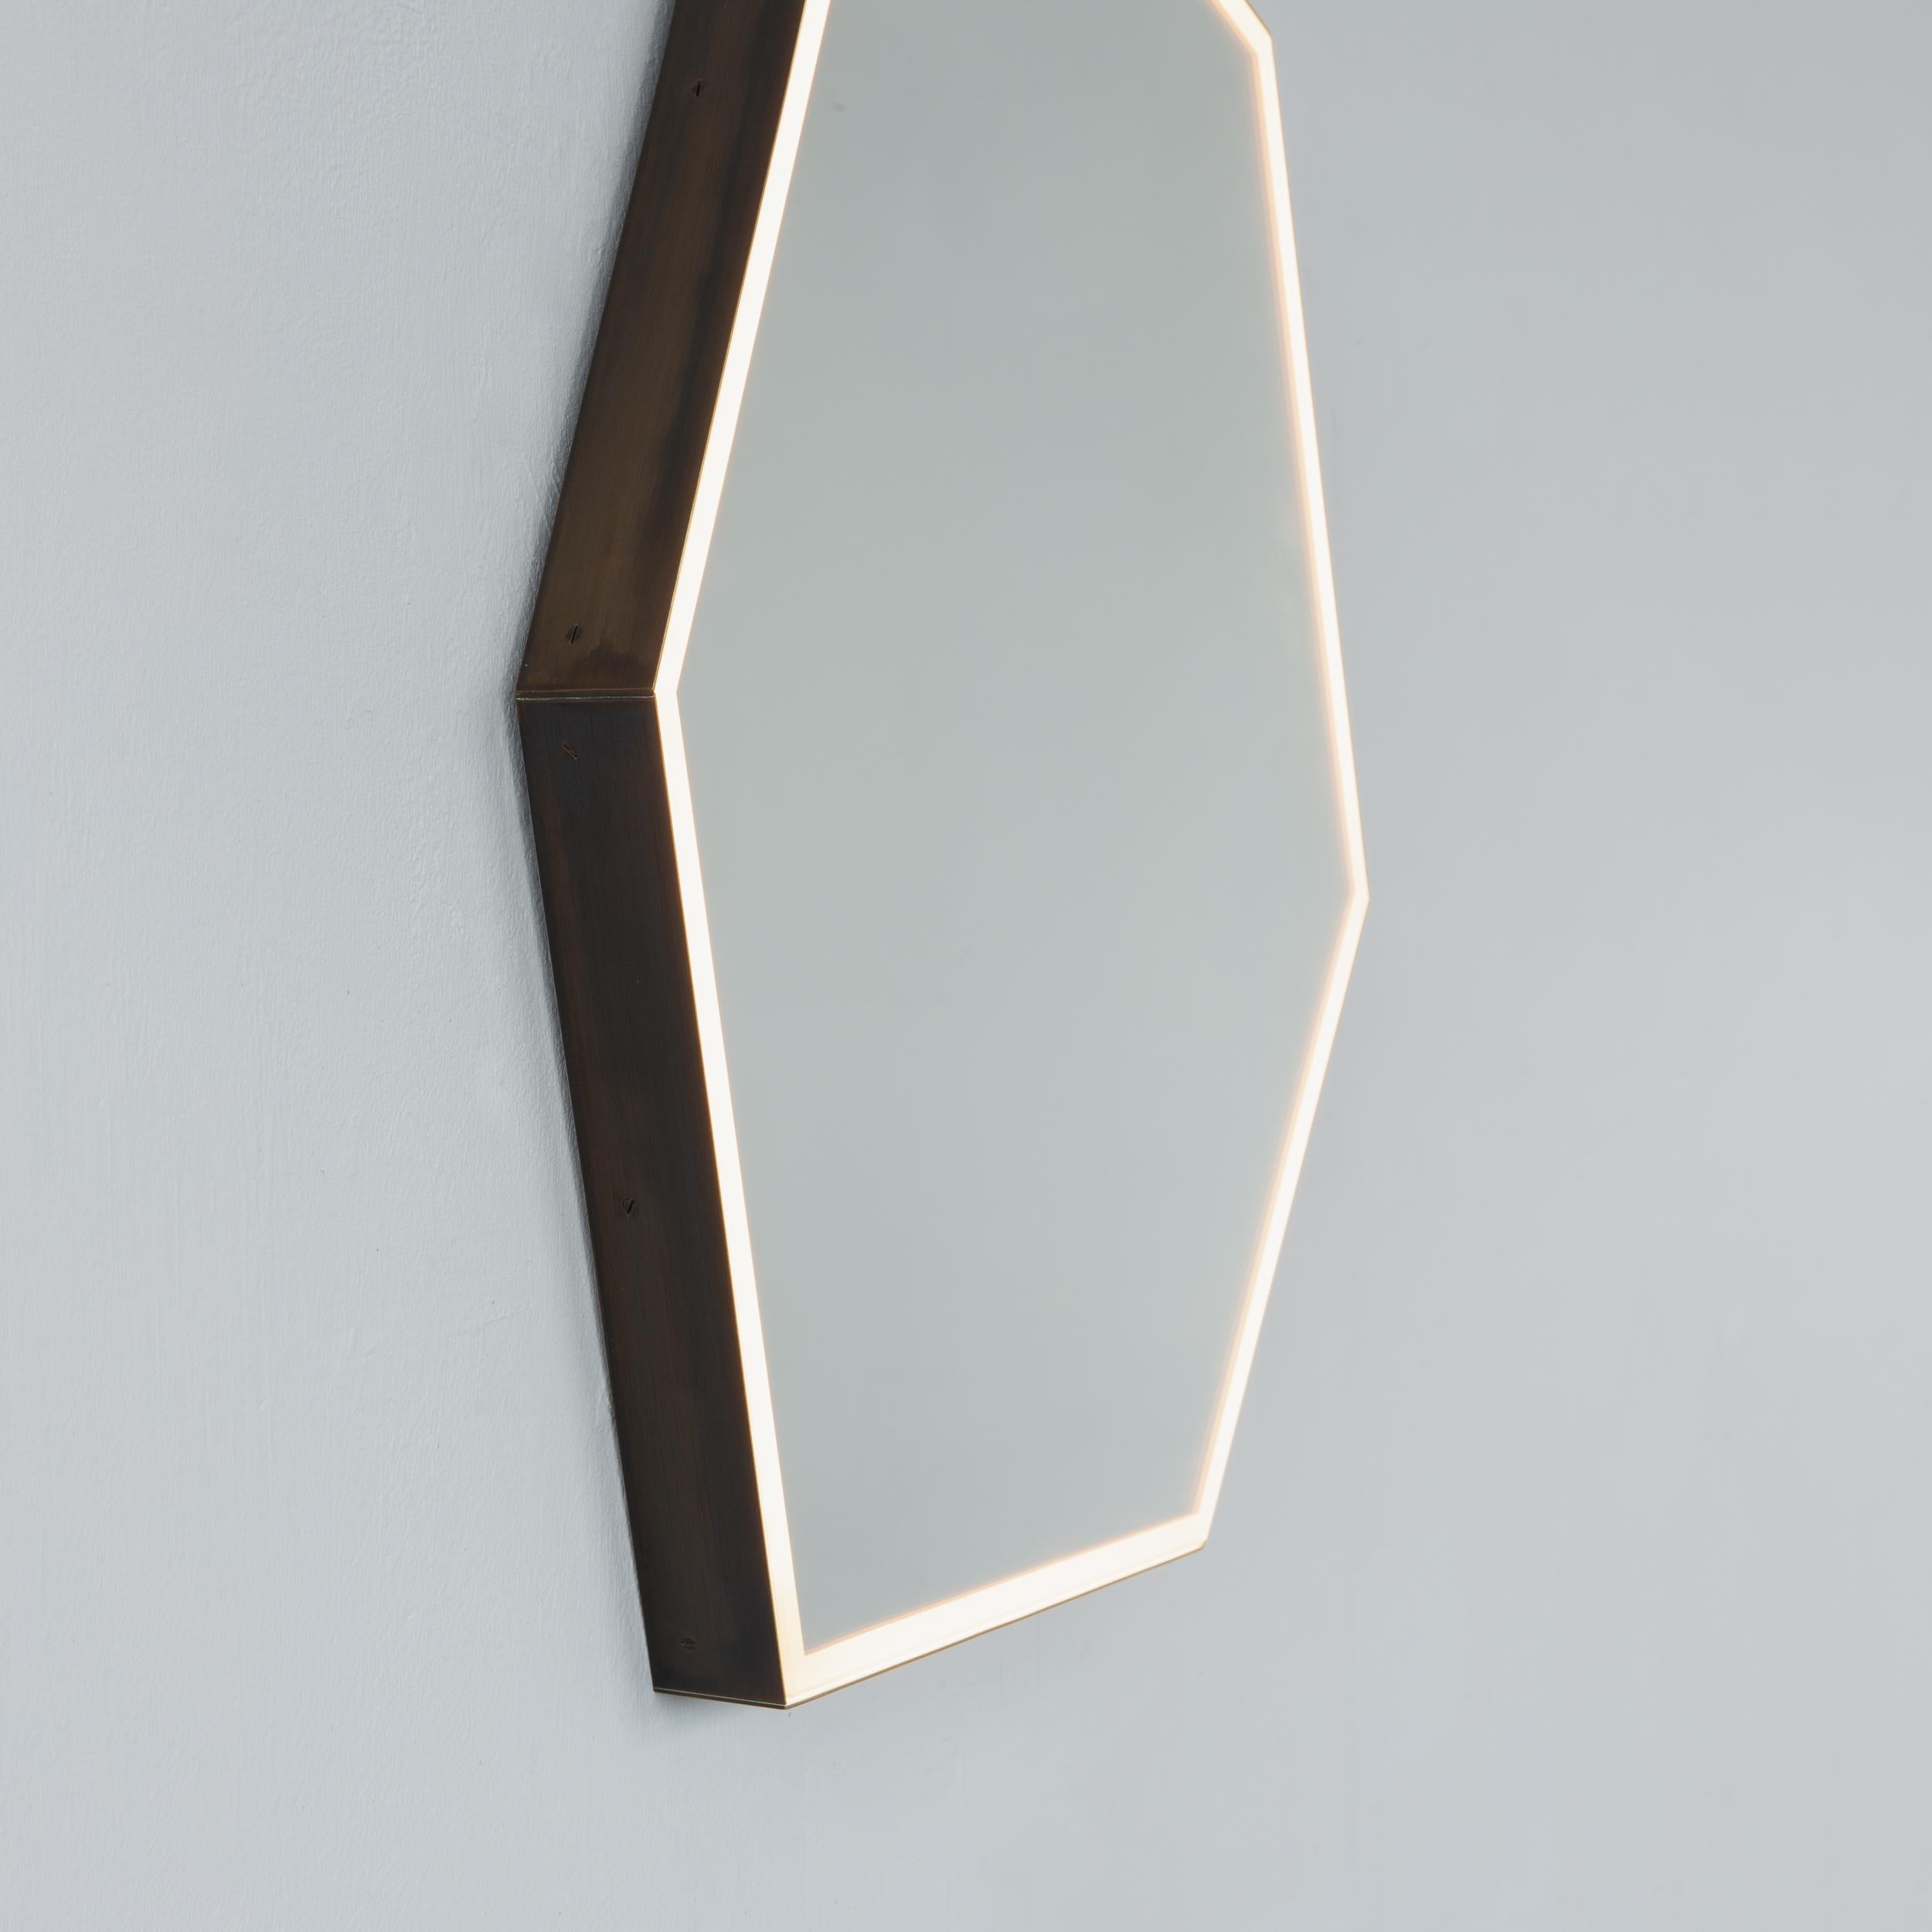 Illuminated Irregular Hexagonal Suspended Mirror, Patina Frame, Sensor Switch For Sale 6